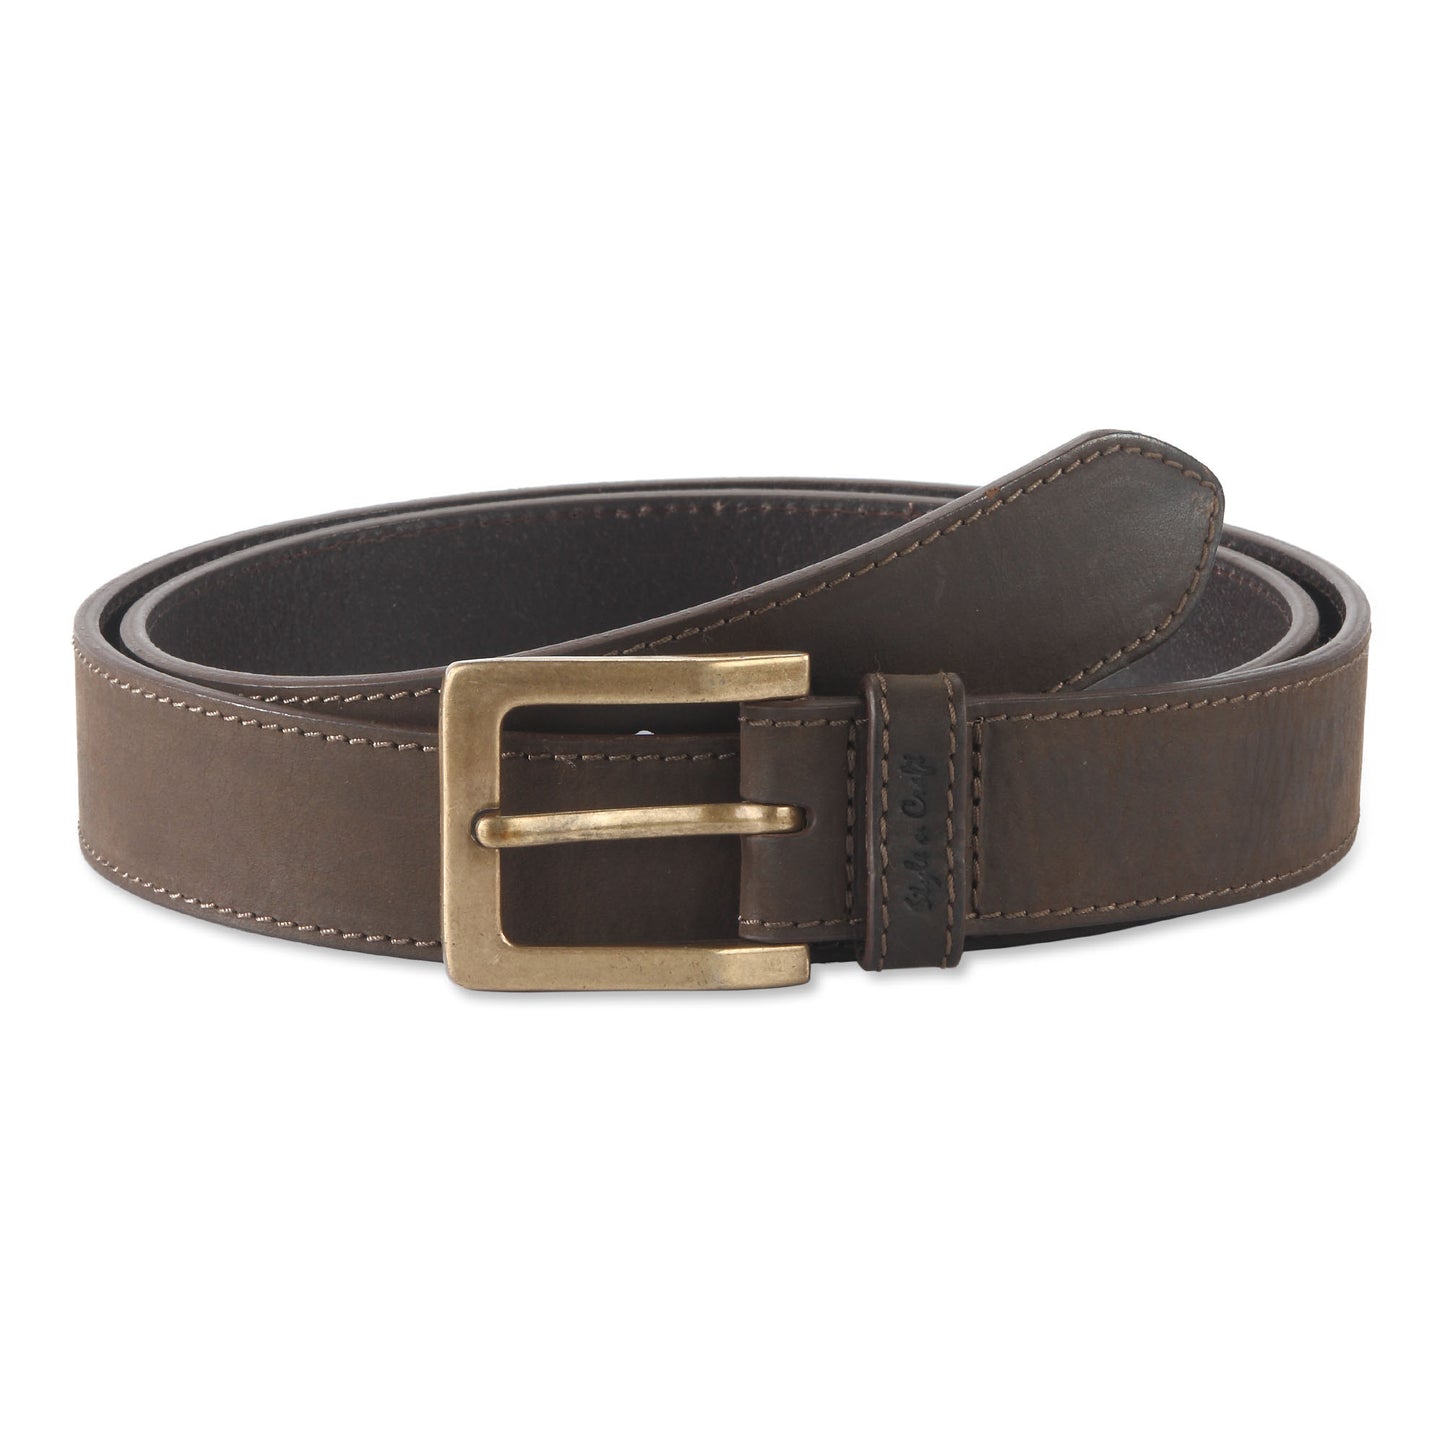 Leather Belt in Dark Brown Color | Style n Craft | #392702